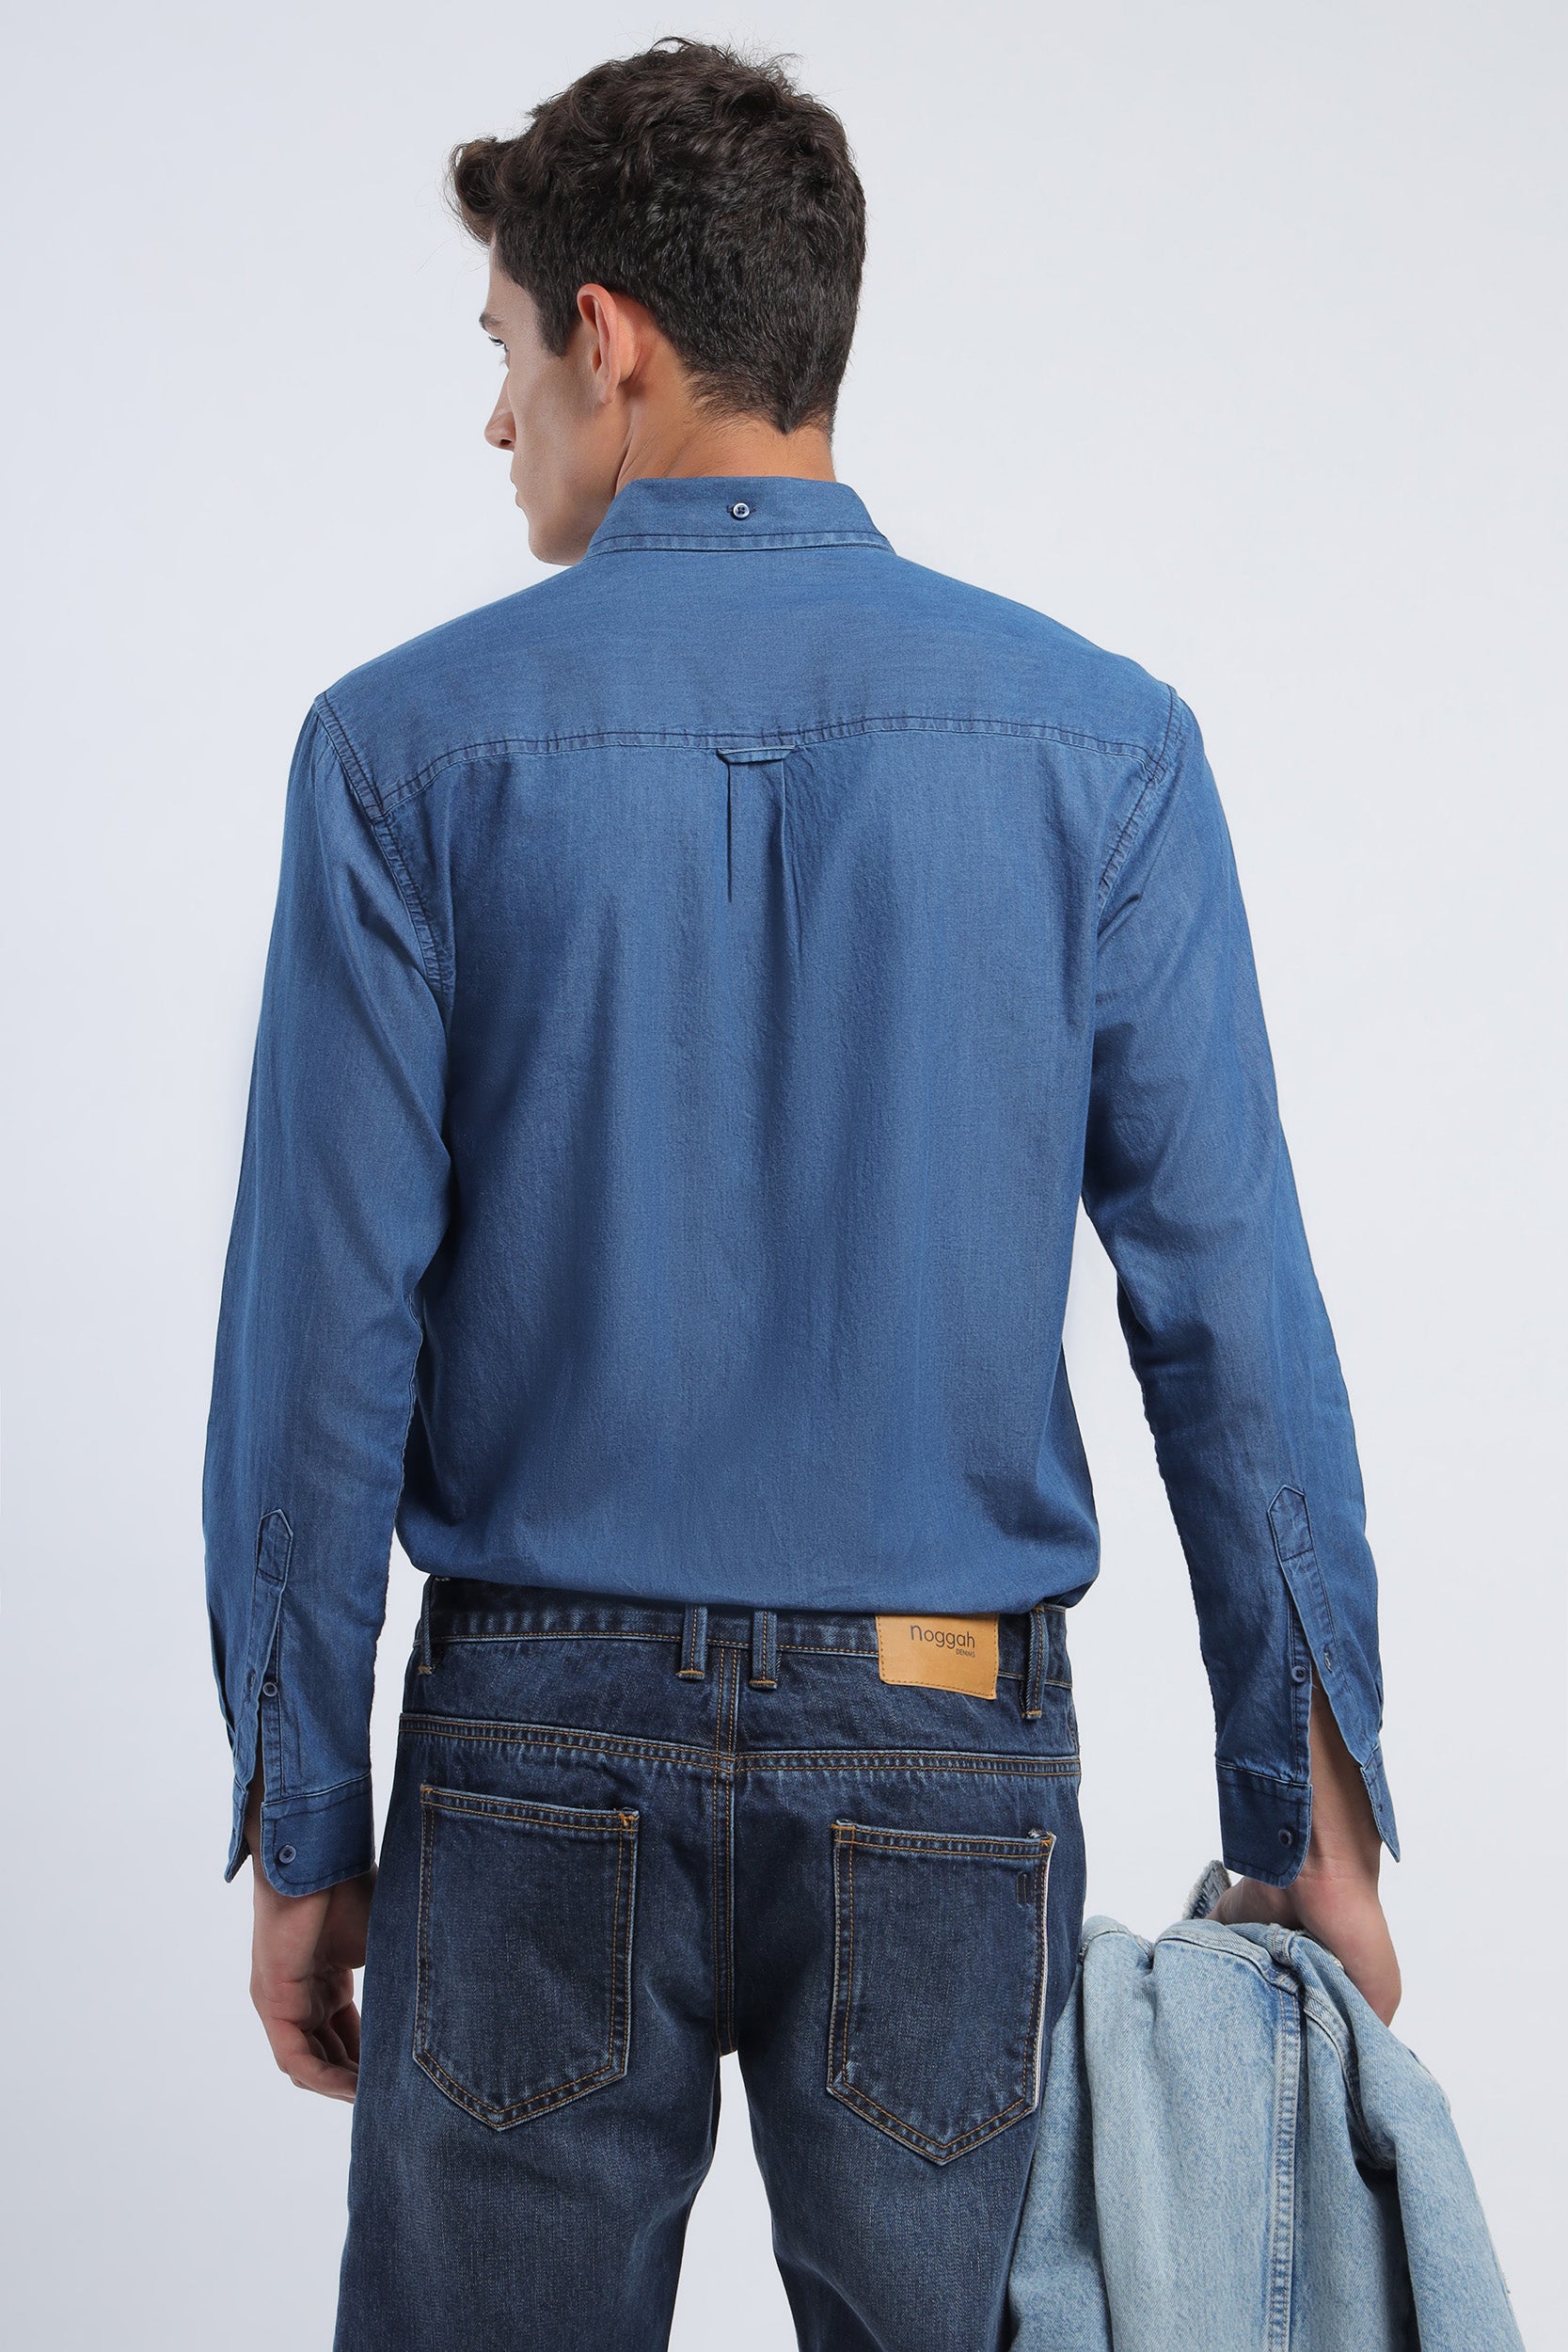 SHOWOFF Men's Spread Collar Denim Solid Blue Casual Shirt